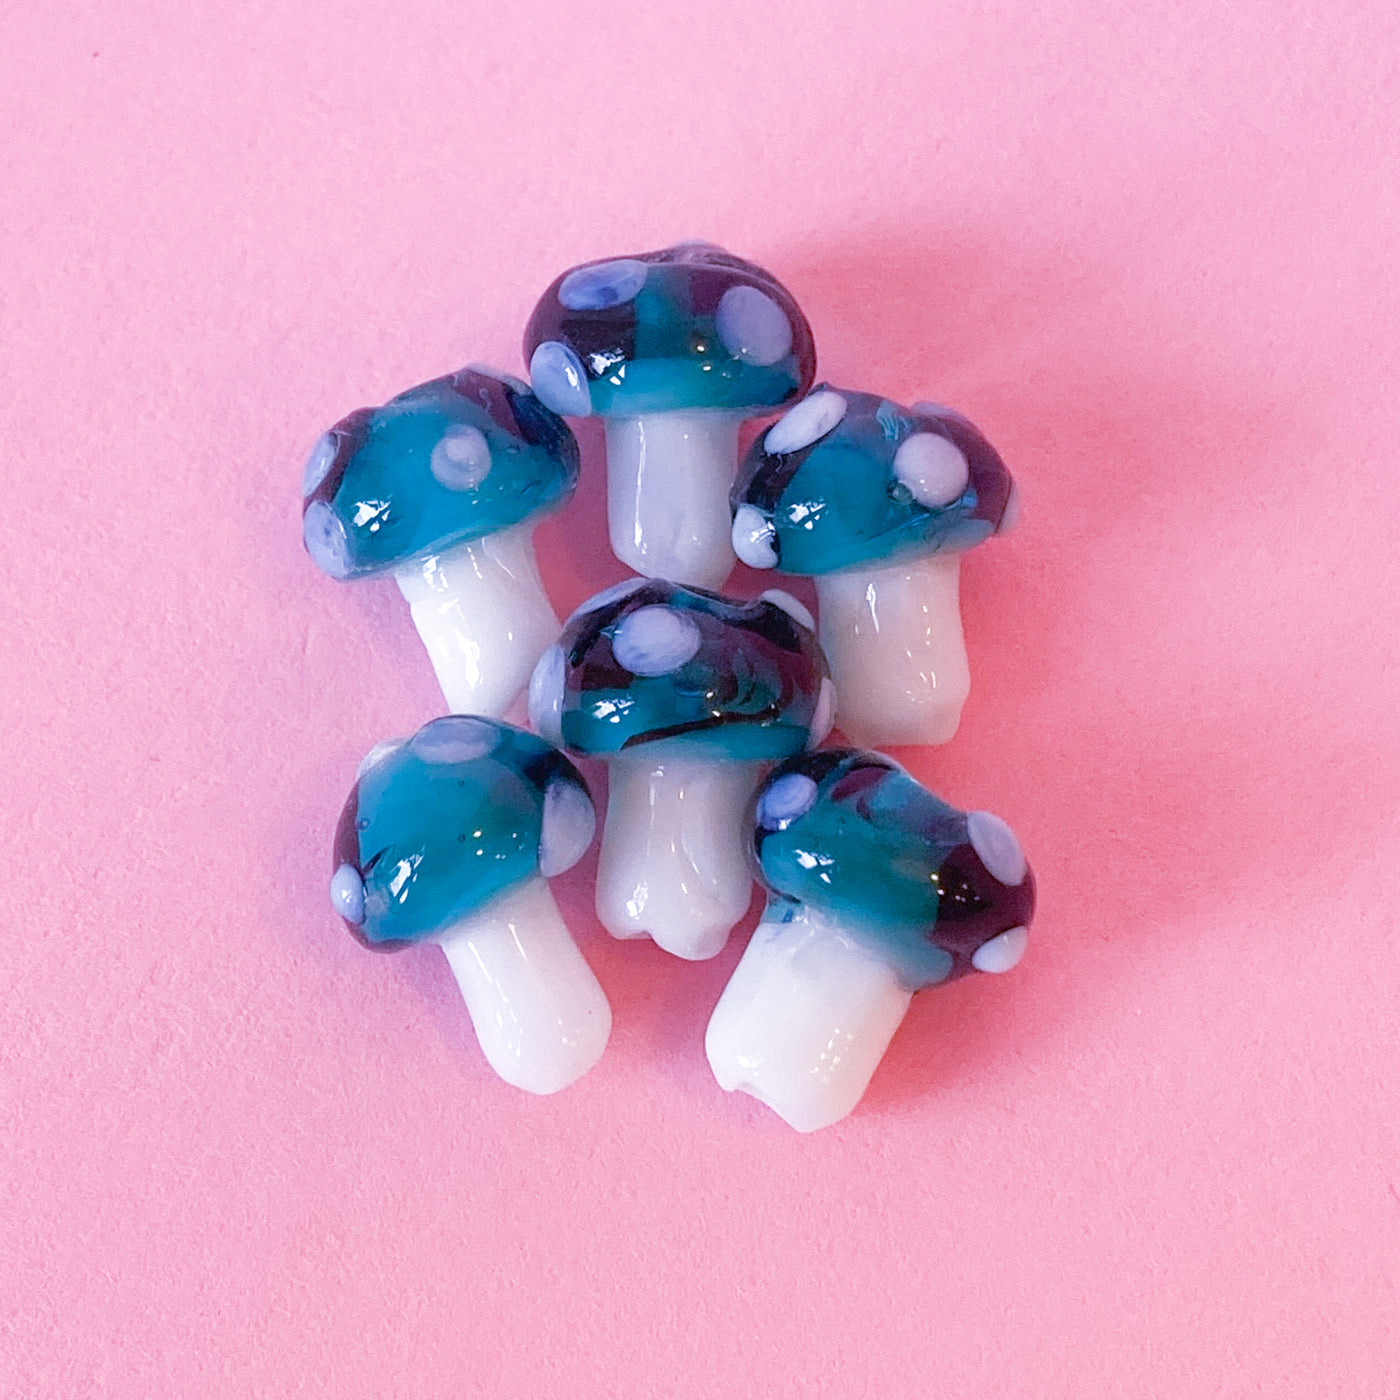 Glass mushroom beads in turquoise